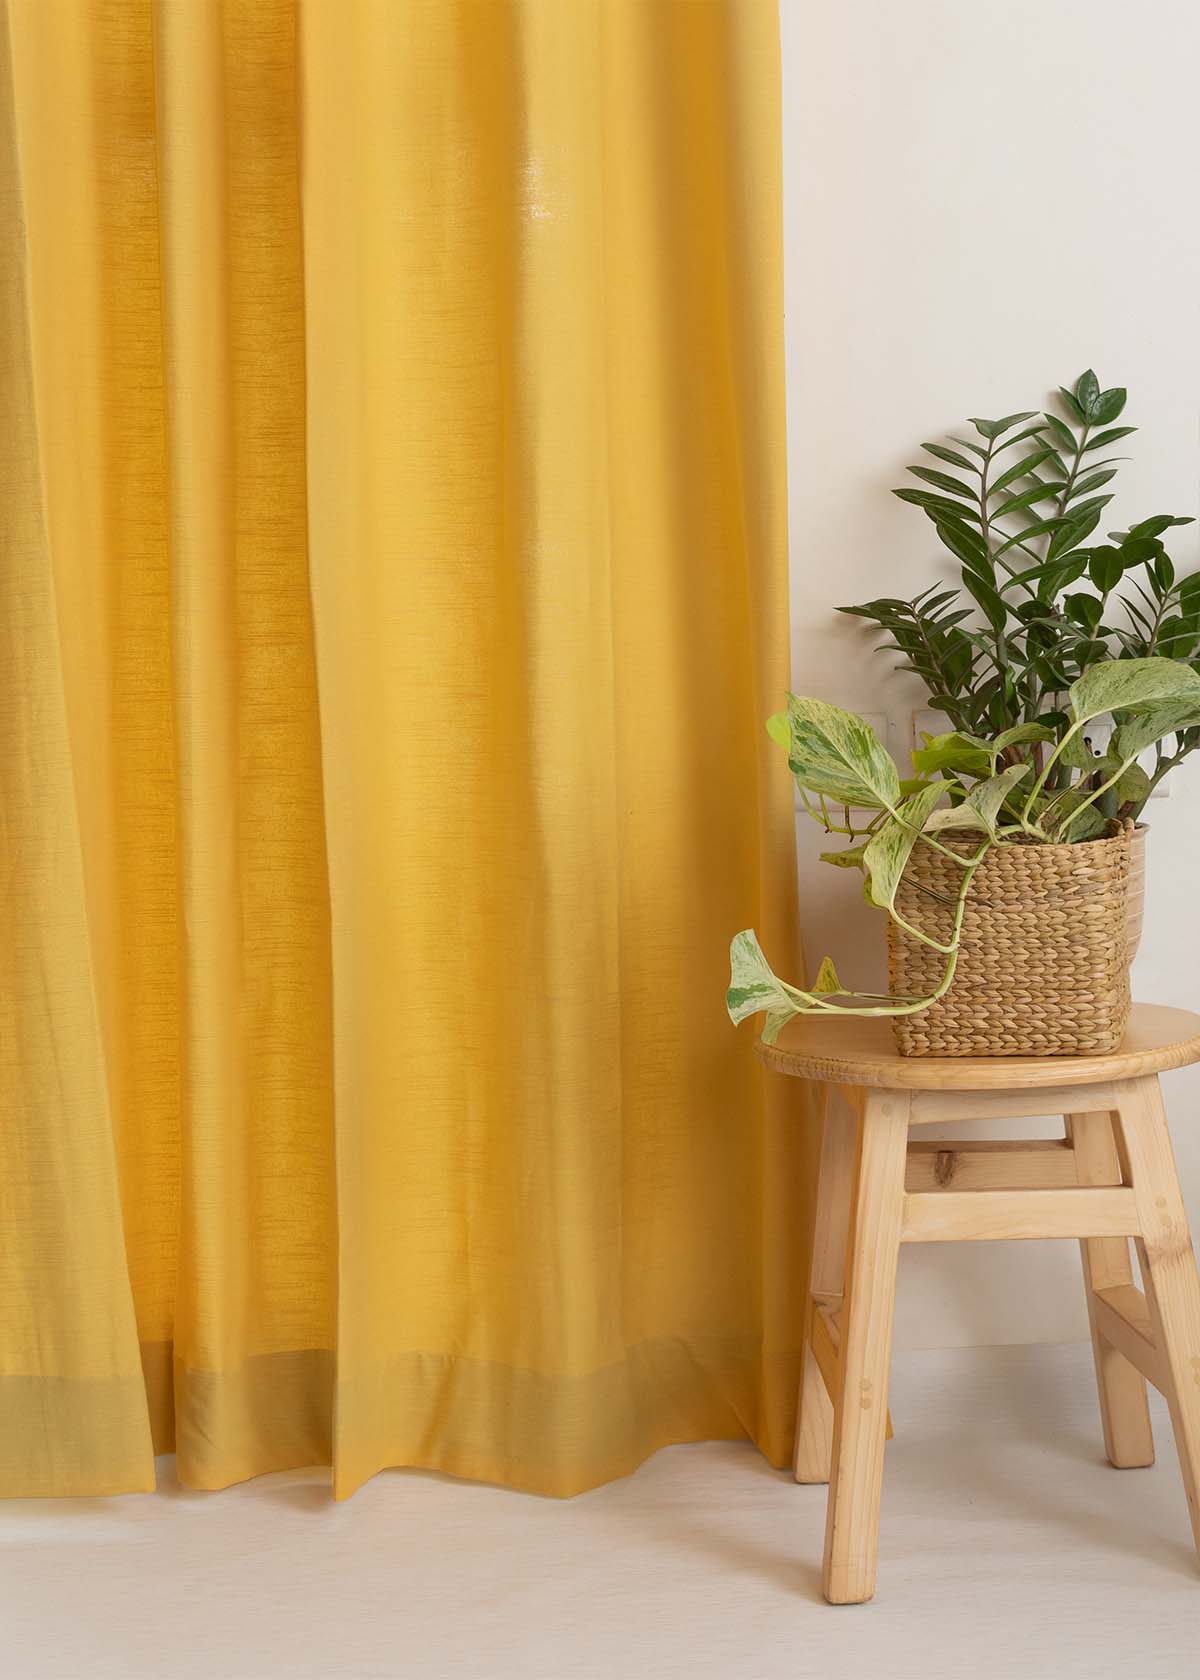 Solid Mustard 100% cotton plain curtain for bedroom - Room darkening - Pack of 1